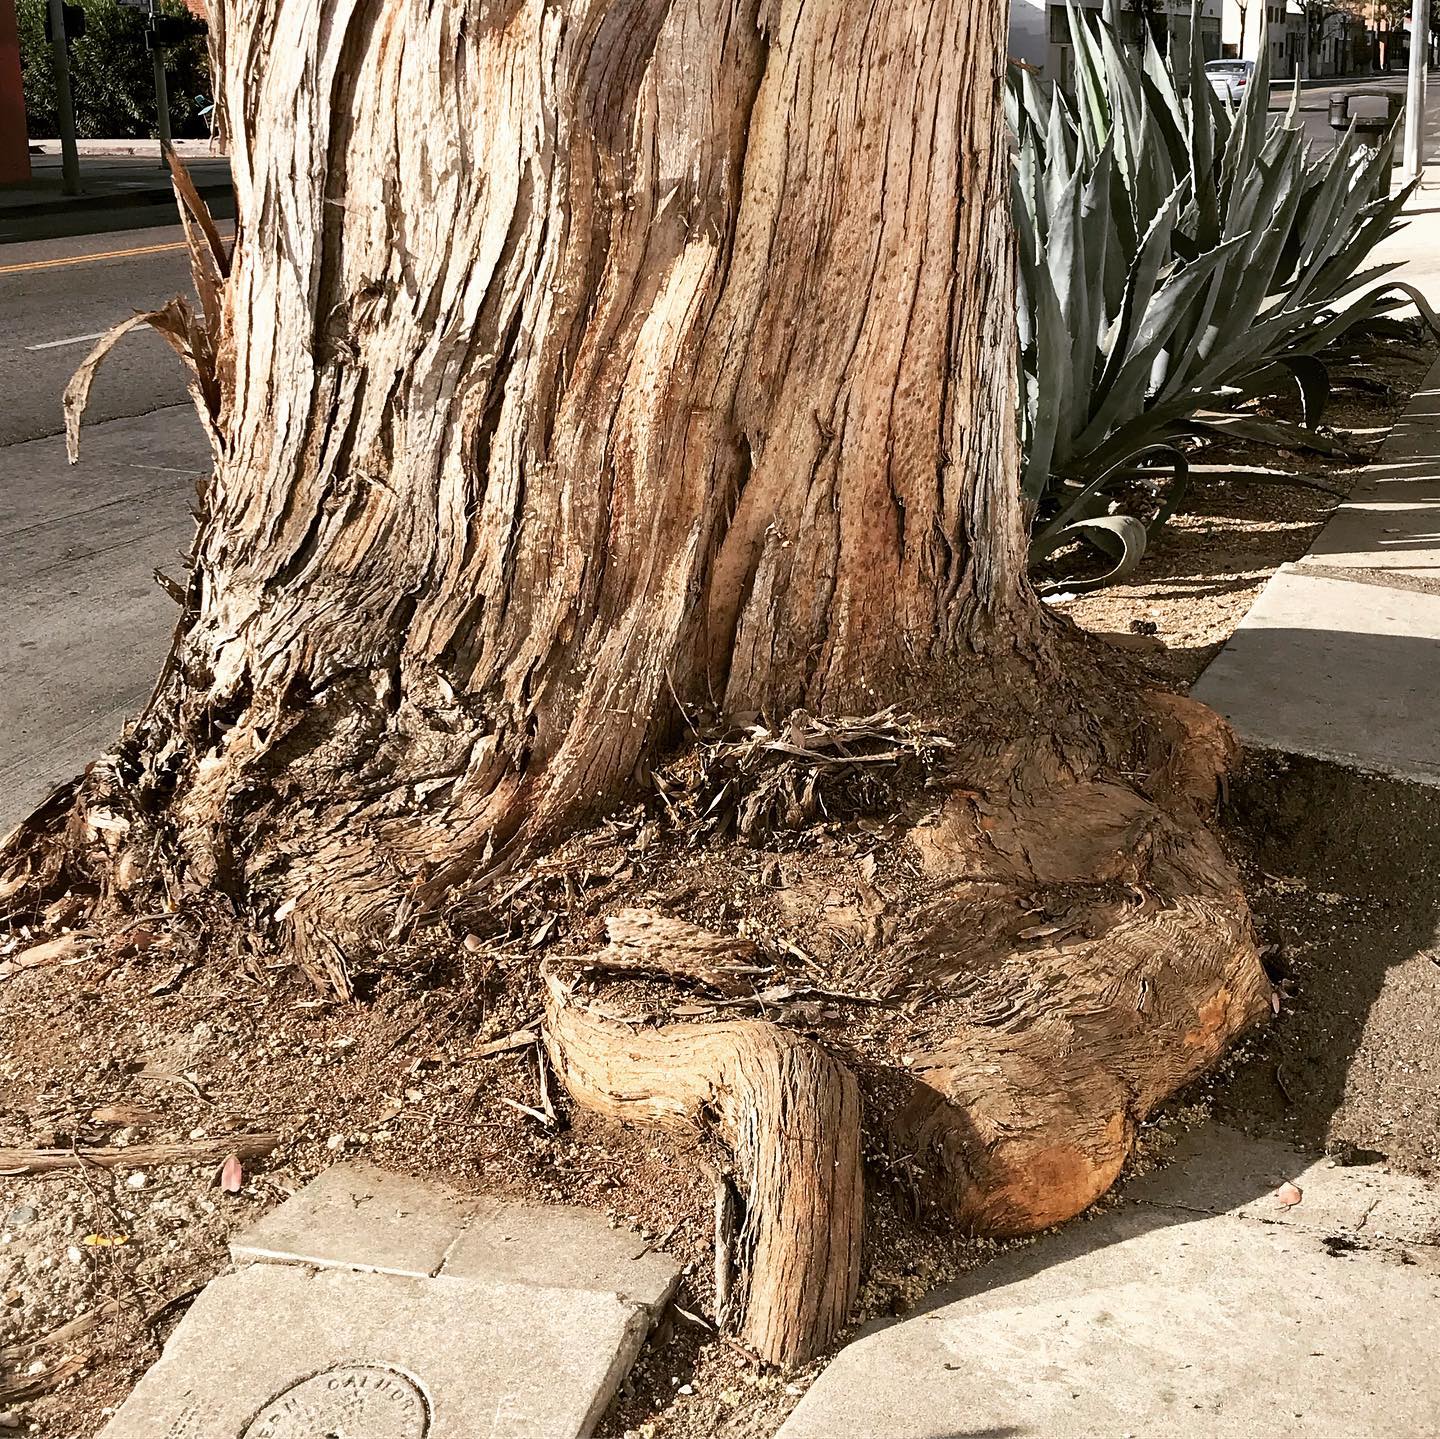 environmental neglect - tree encroaching on sidewalk is a hazard